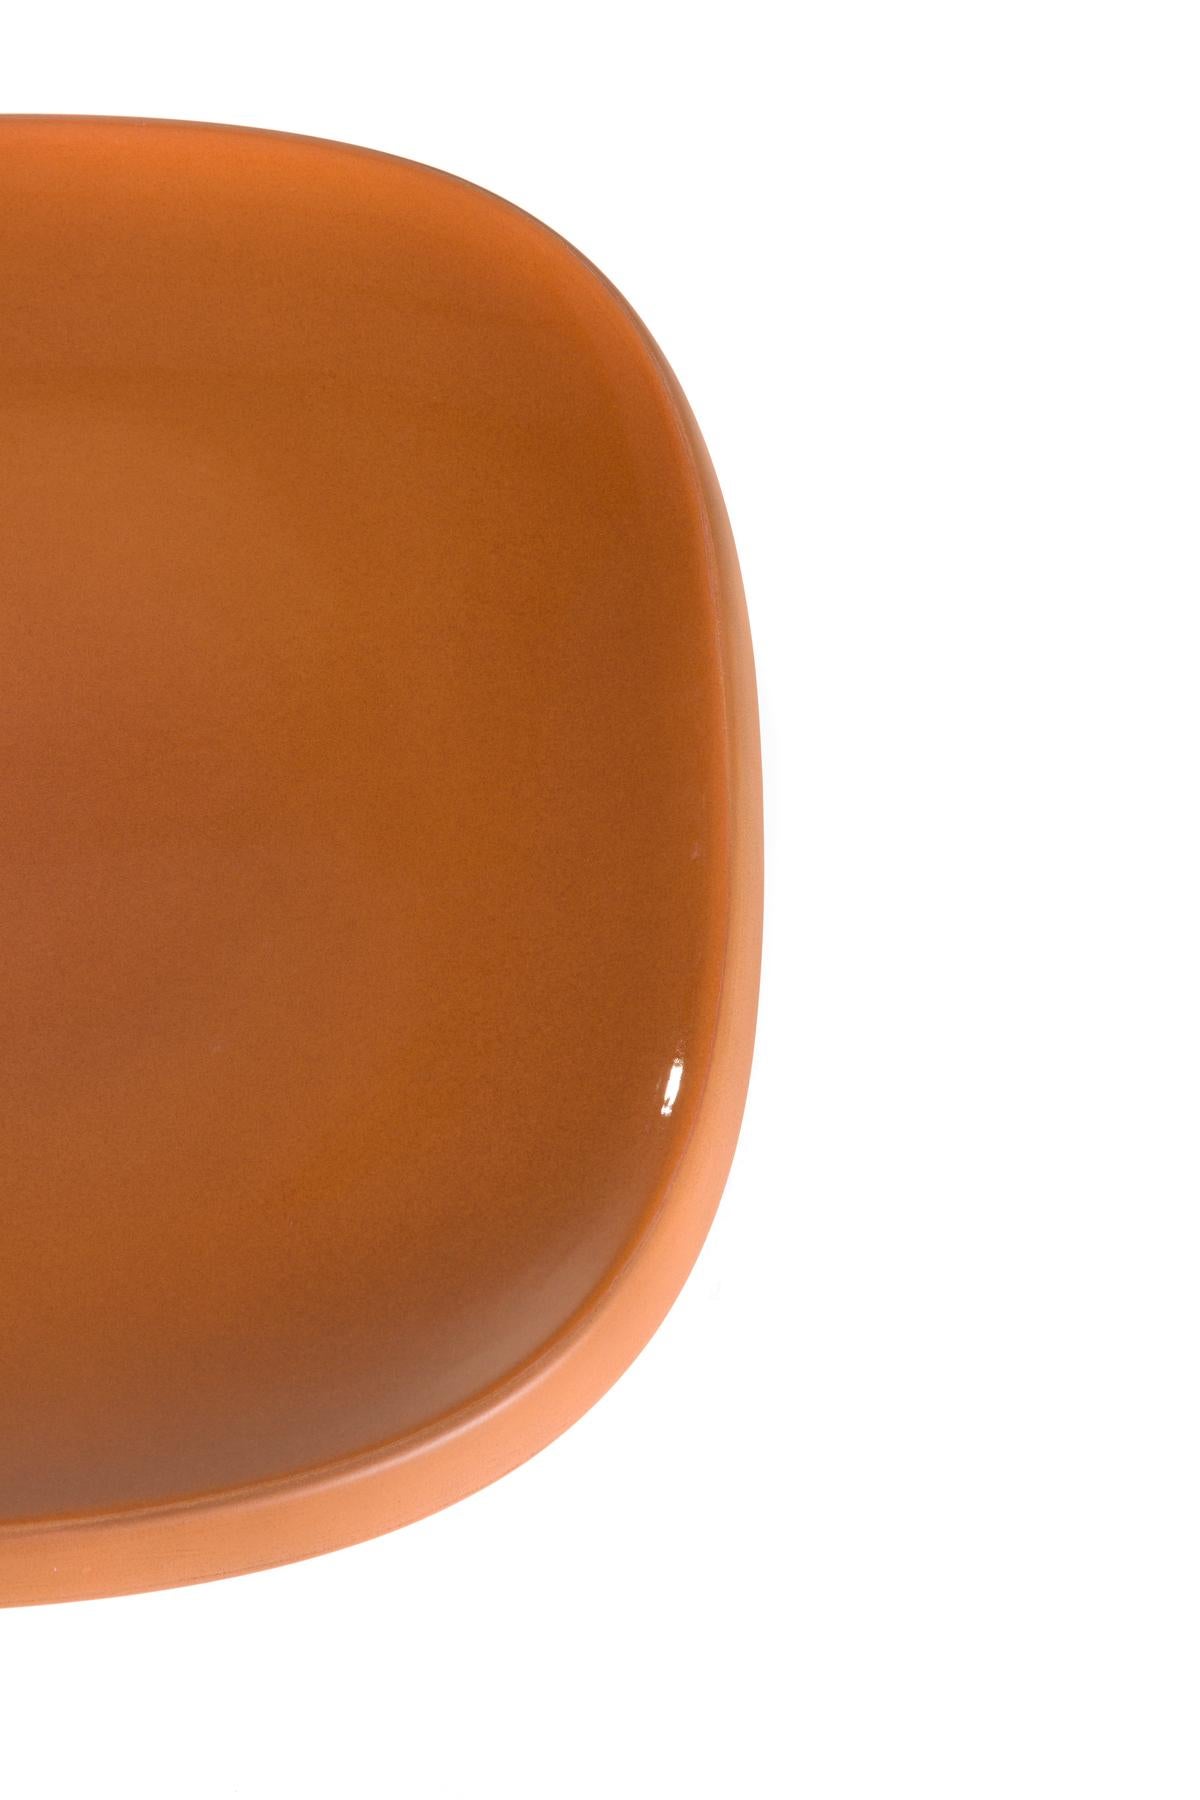 Modern Moooi Obon Rectangular Low Ceramic Table in Grey Finish by Simone Bonanni For Sale